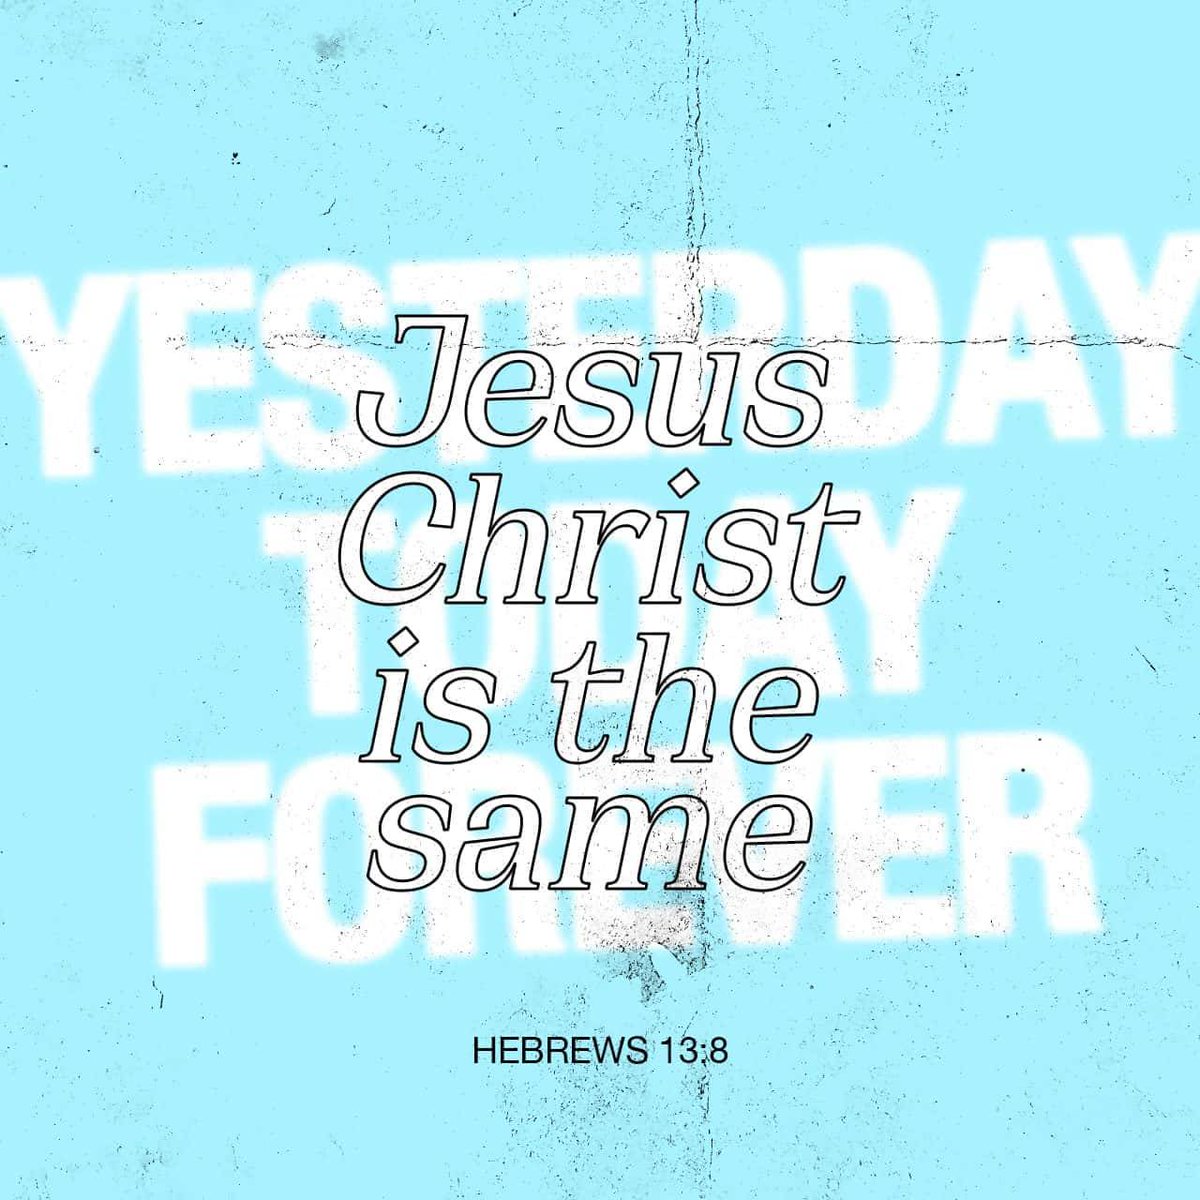 Day: 629 Verse: Hebrews 13:8 NLT